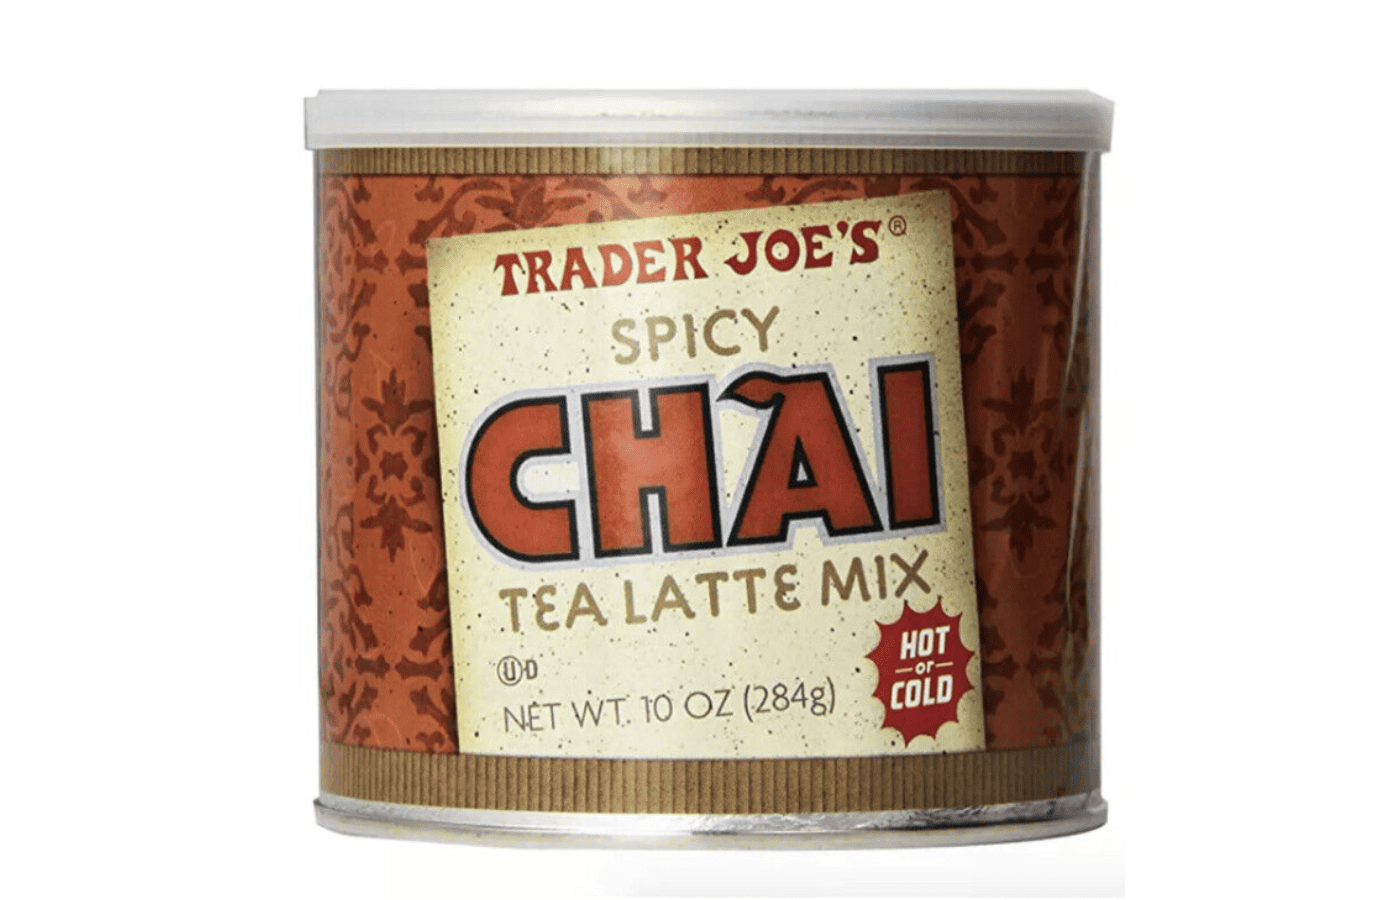 Does Trader Joe's Spicy Chai Have Caffeine